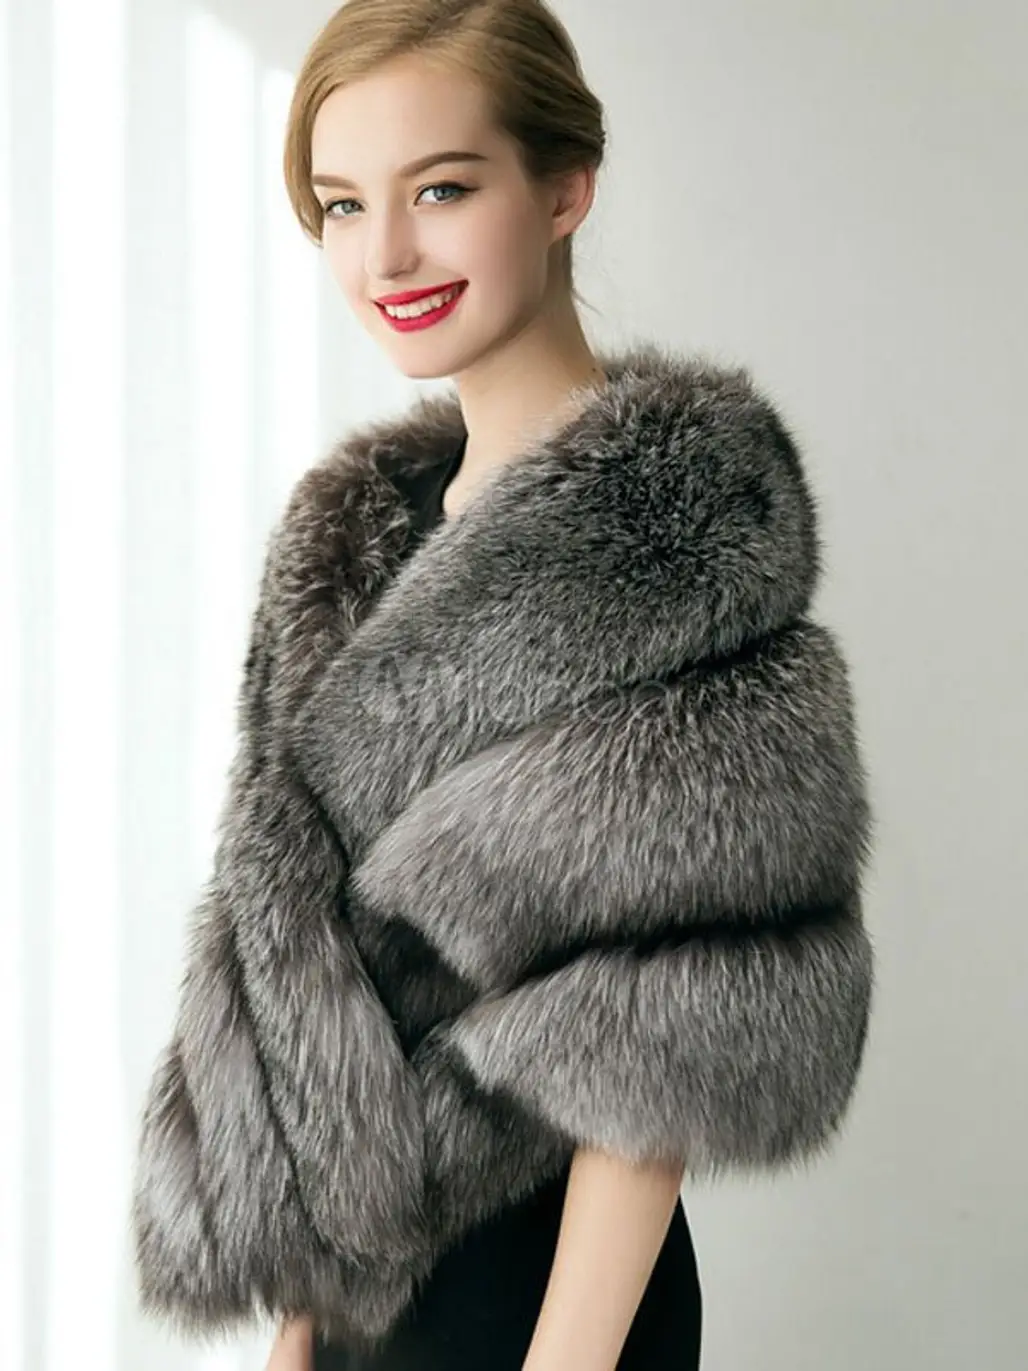 fur clothing, fur, fashion model, outerwear, woolen,